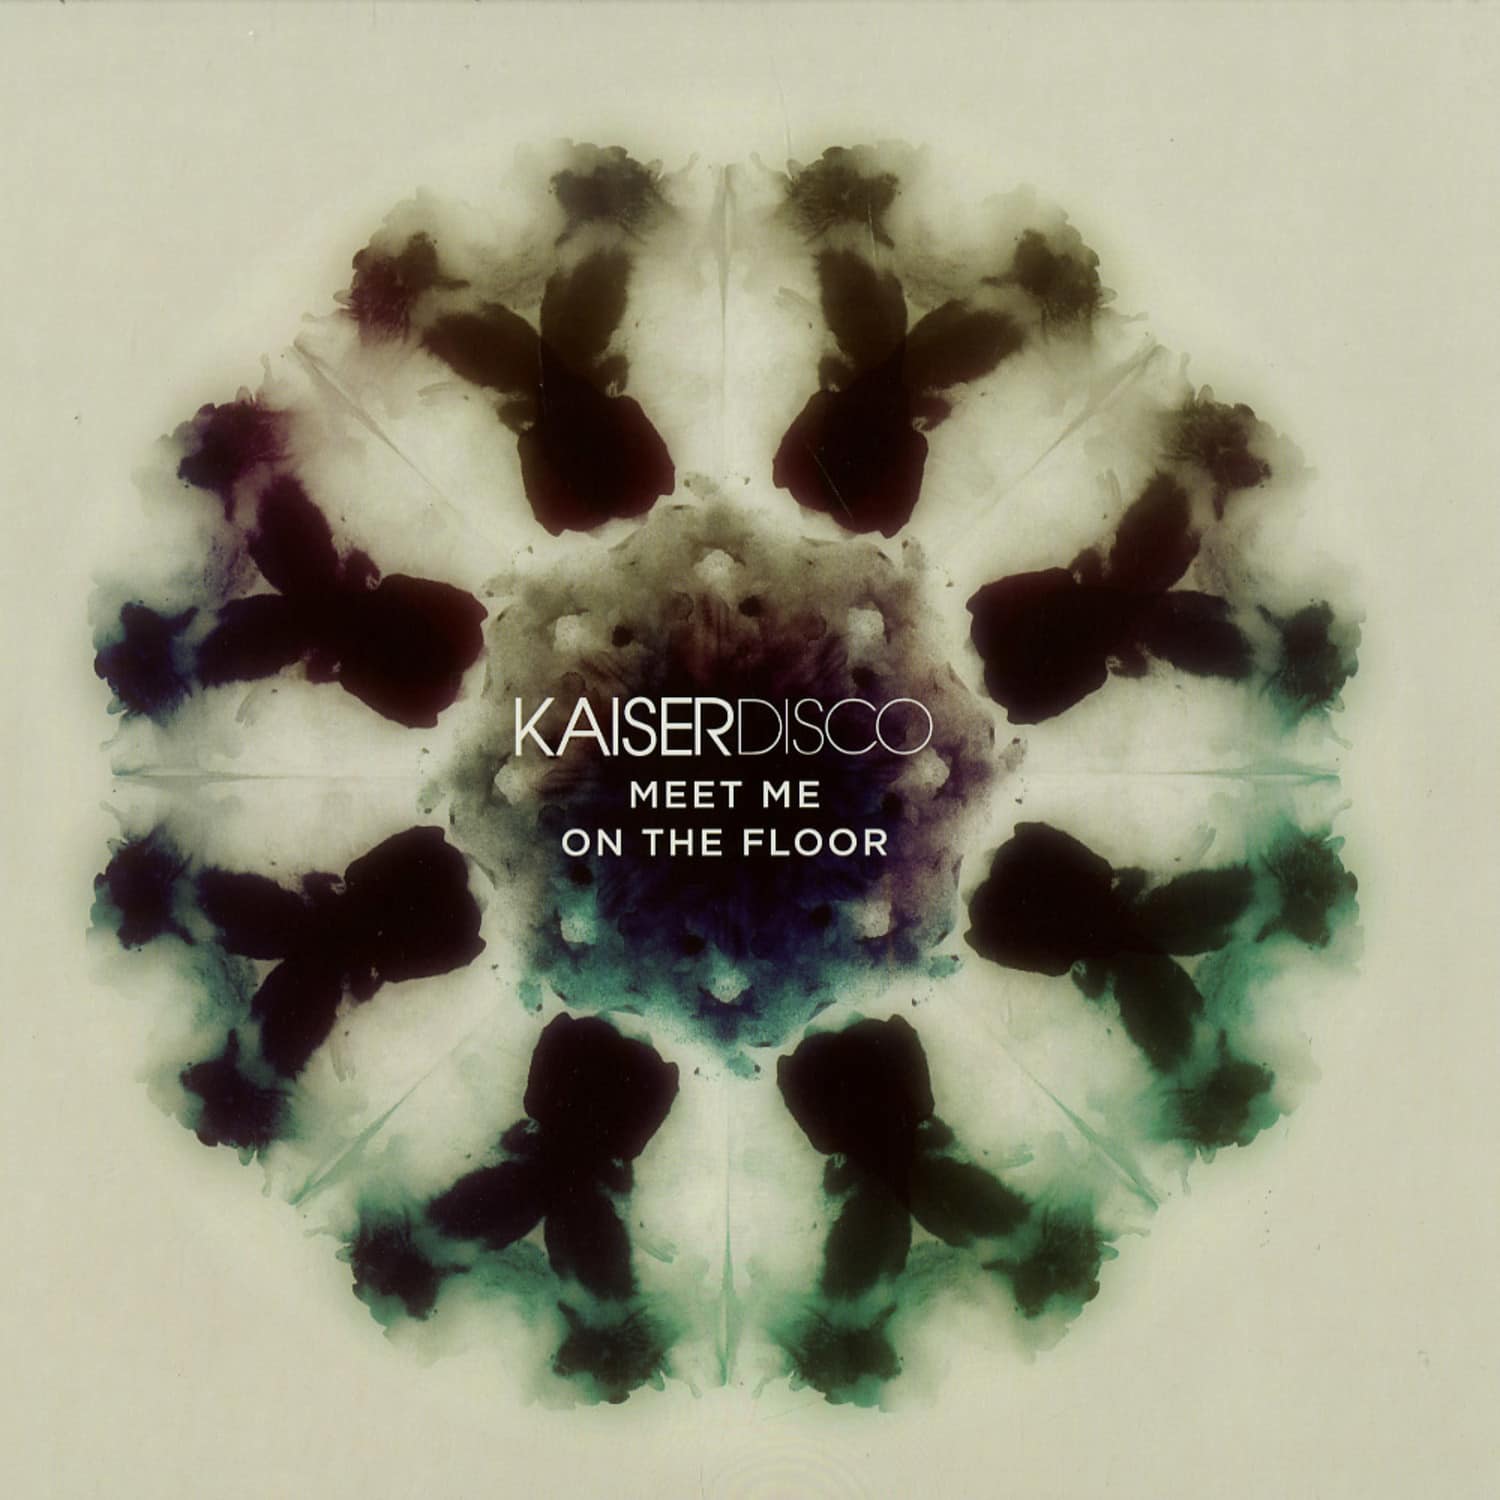 Kaiserdisco - MEET ME ON THE FLOOR